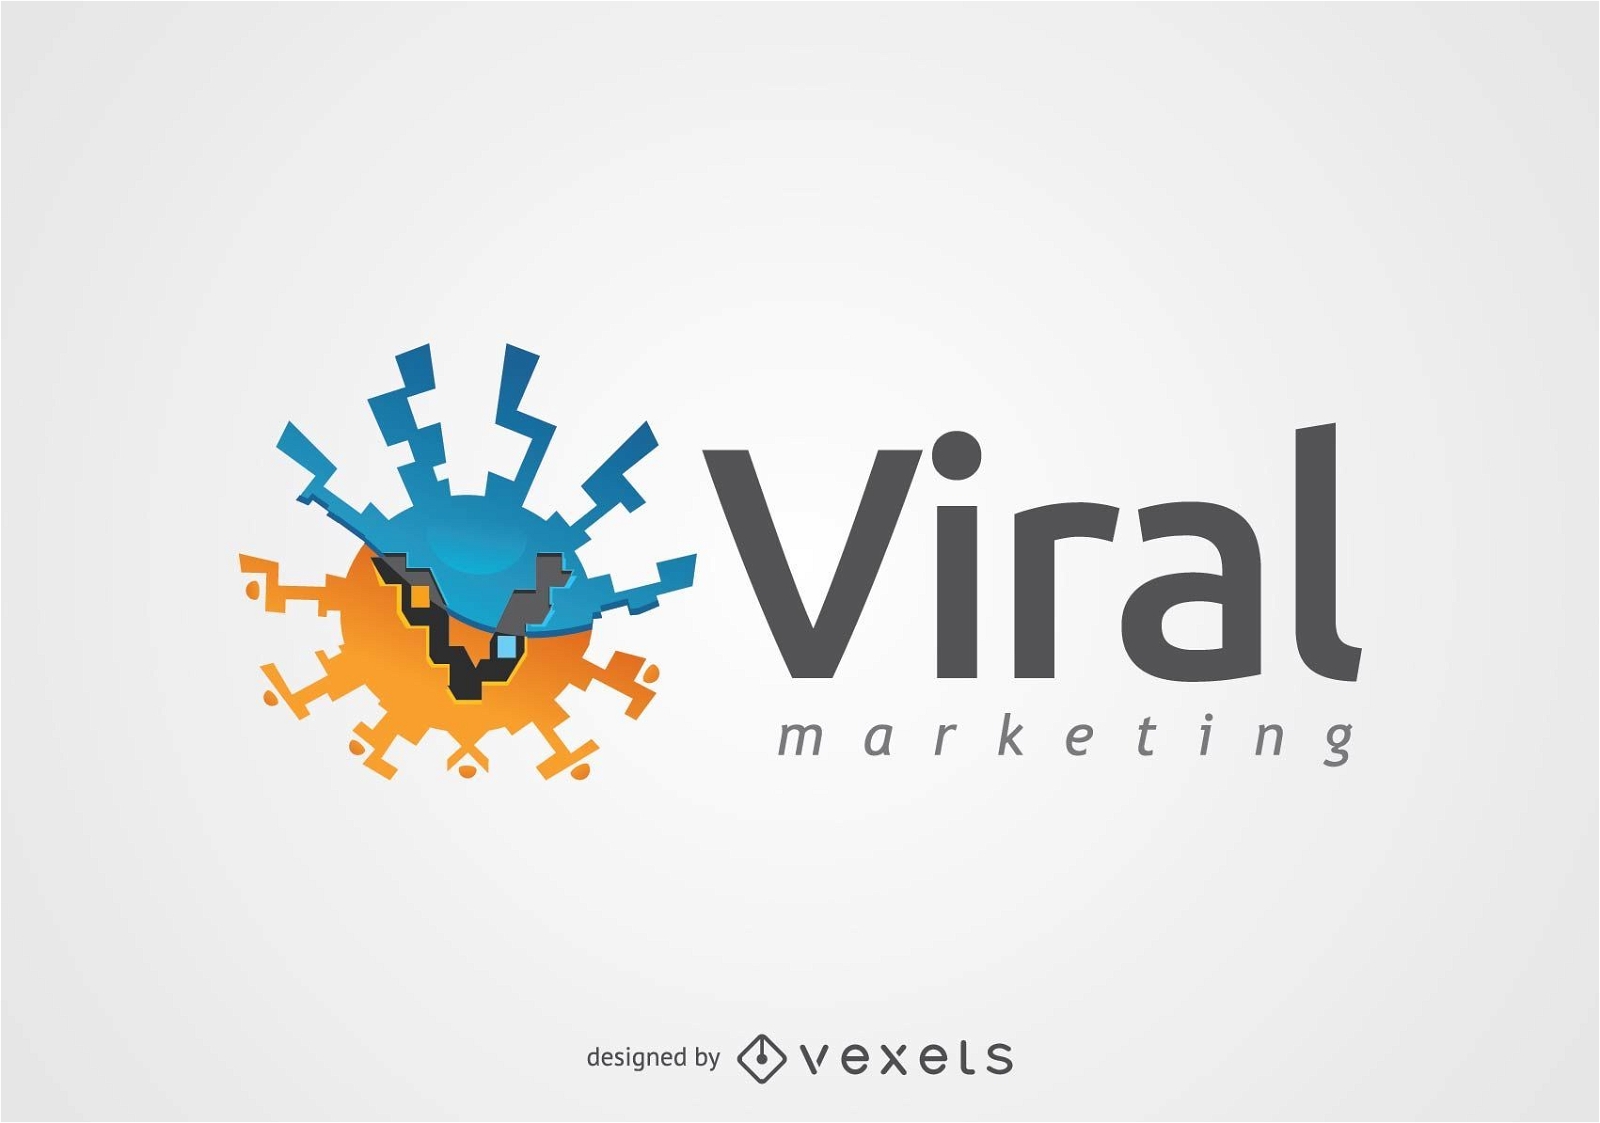 Abstraktes rundes Virus-Marketing-Logo